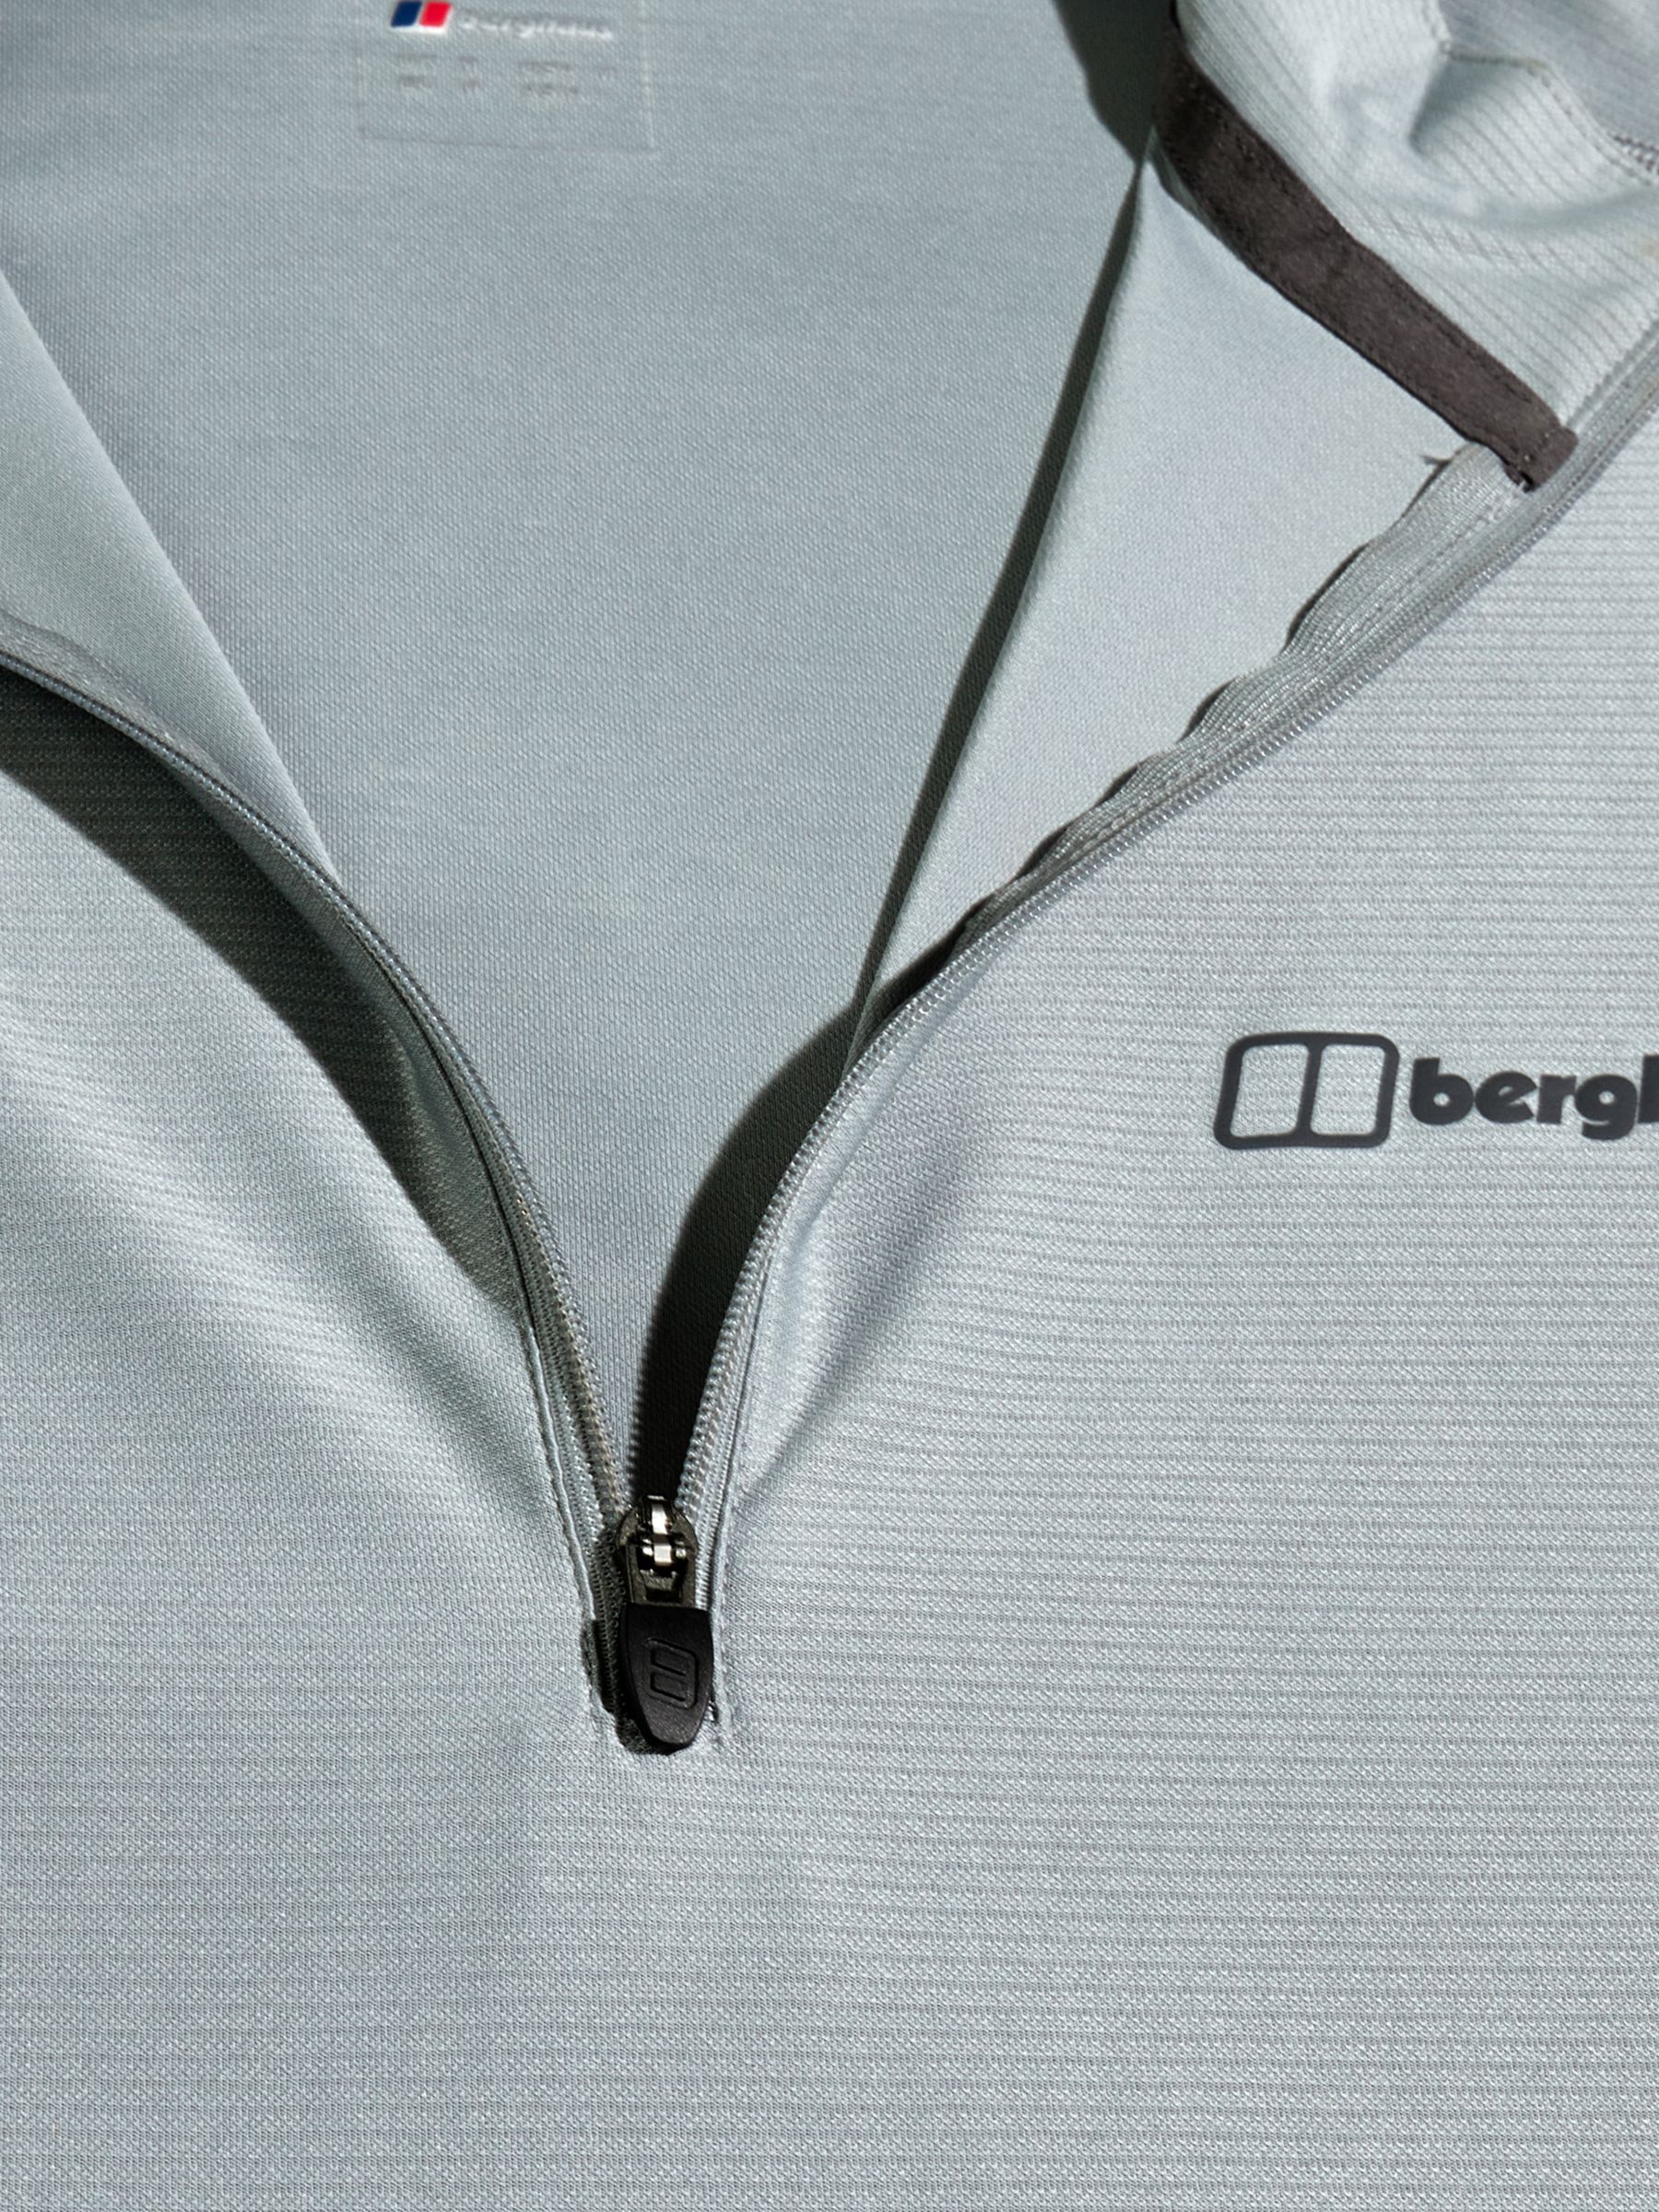 Berghaus Long Sleeve 1/4 Zip Top, Monument, S